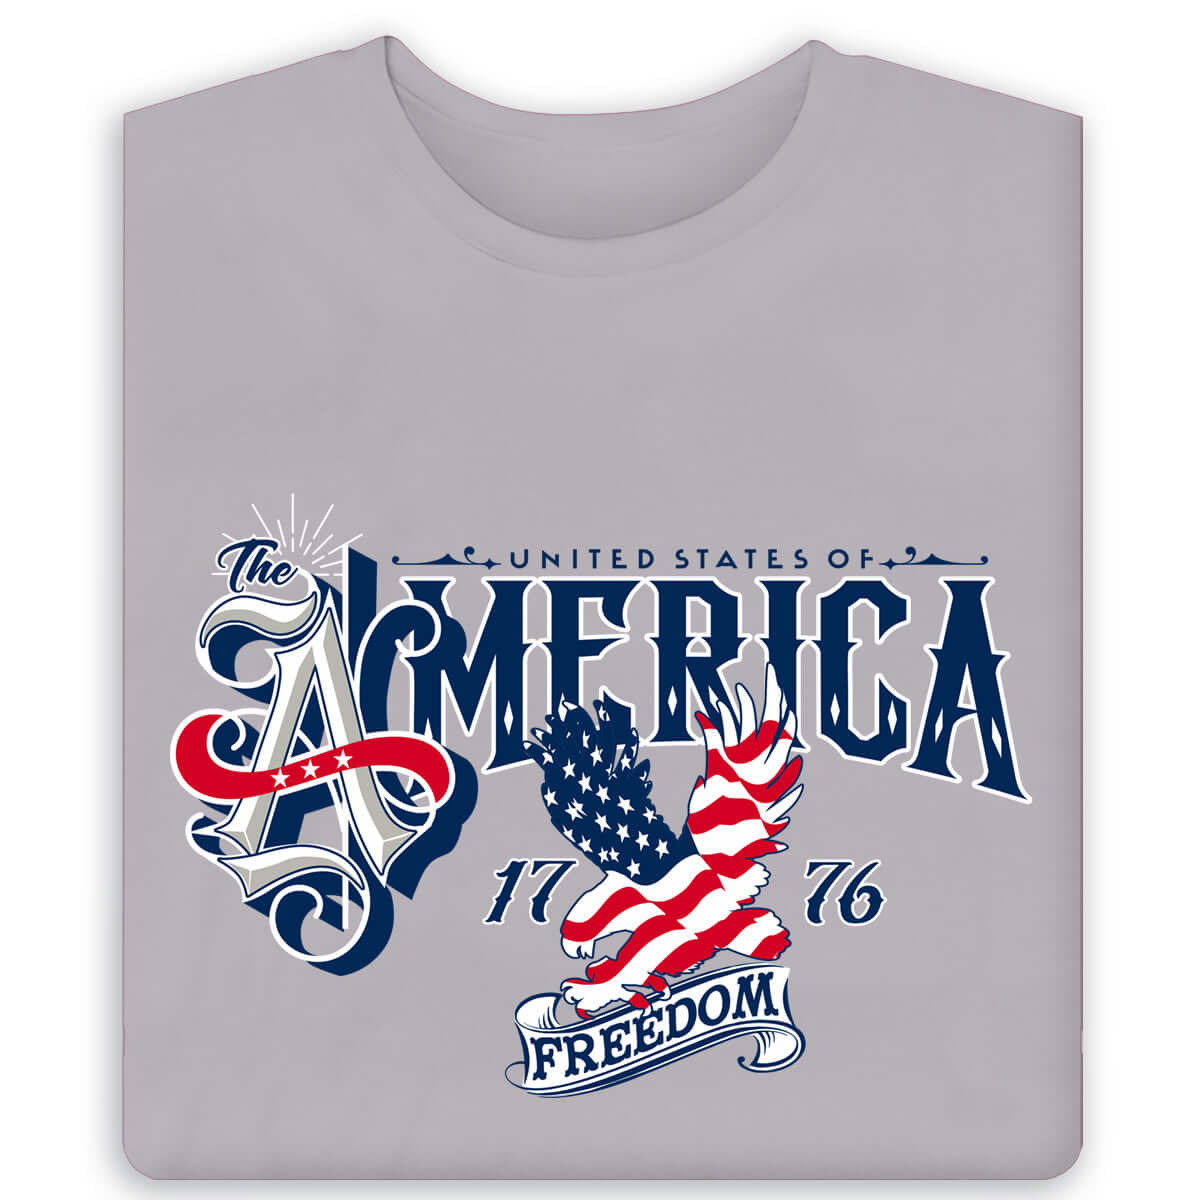 Under Armour Freedom Flag Bold Grey T-Shirt – The Flag Shirt